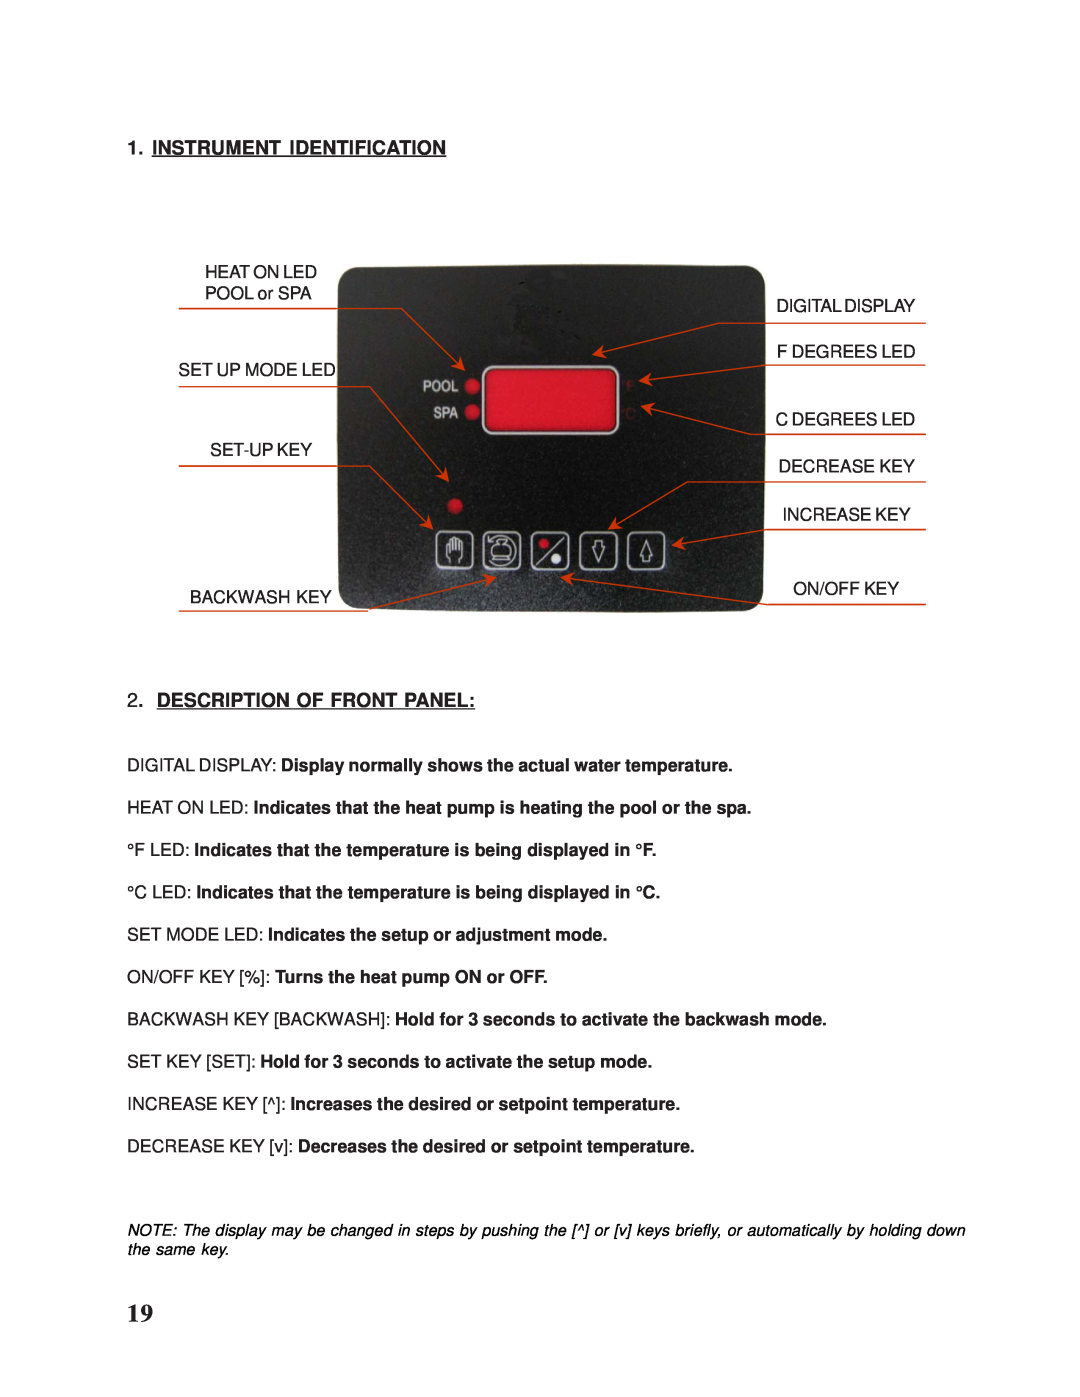 Taylor Pool Heat Pump owner manual Instrument Identification, Description Of Front Panel, Backwash Key, On/Off Key 